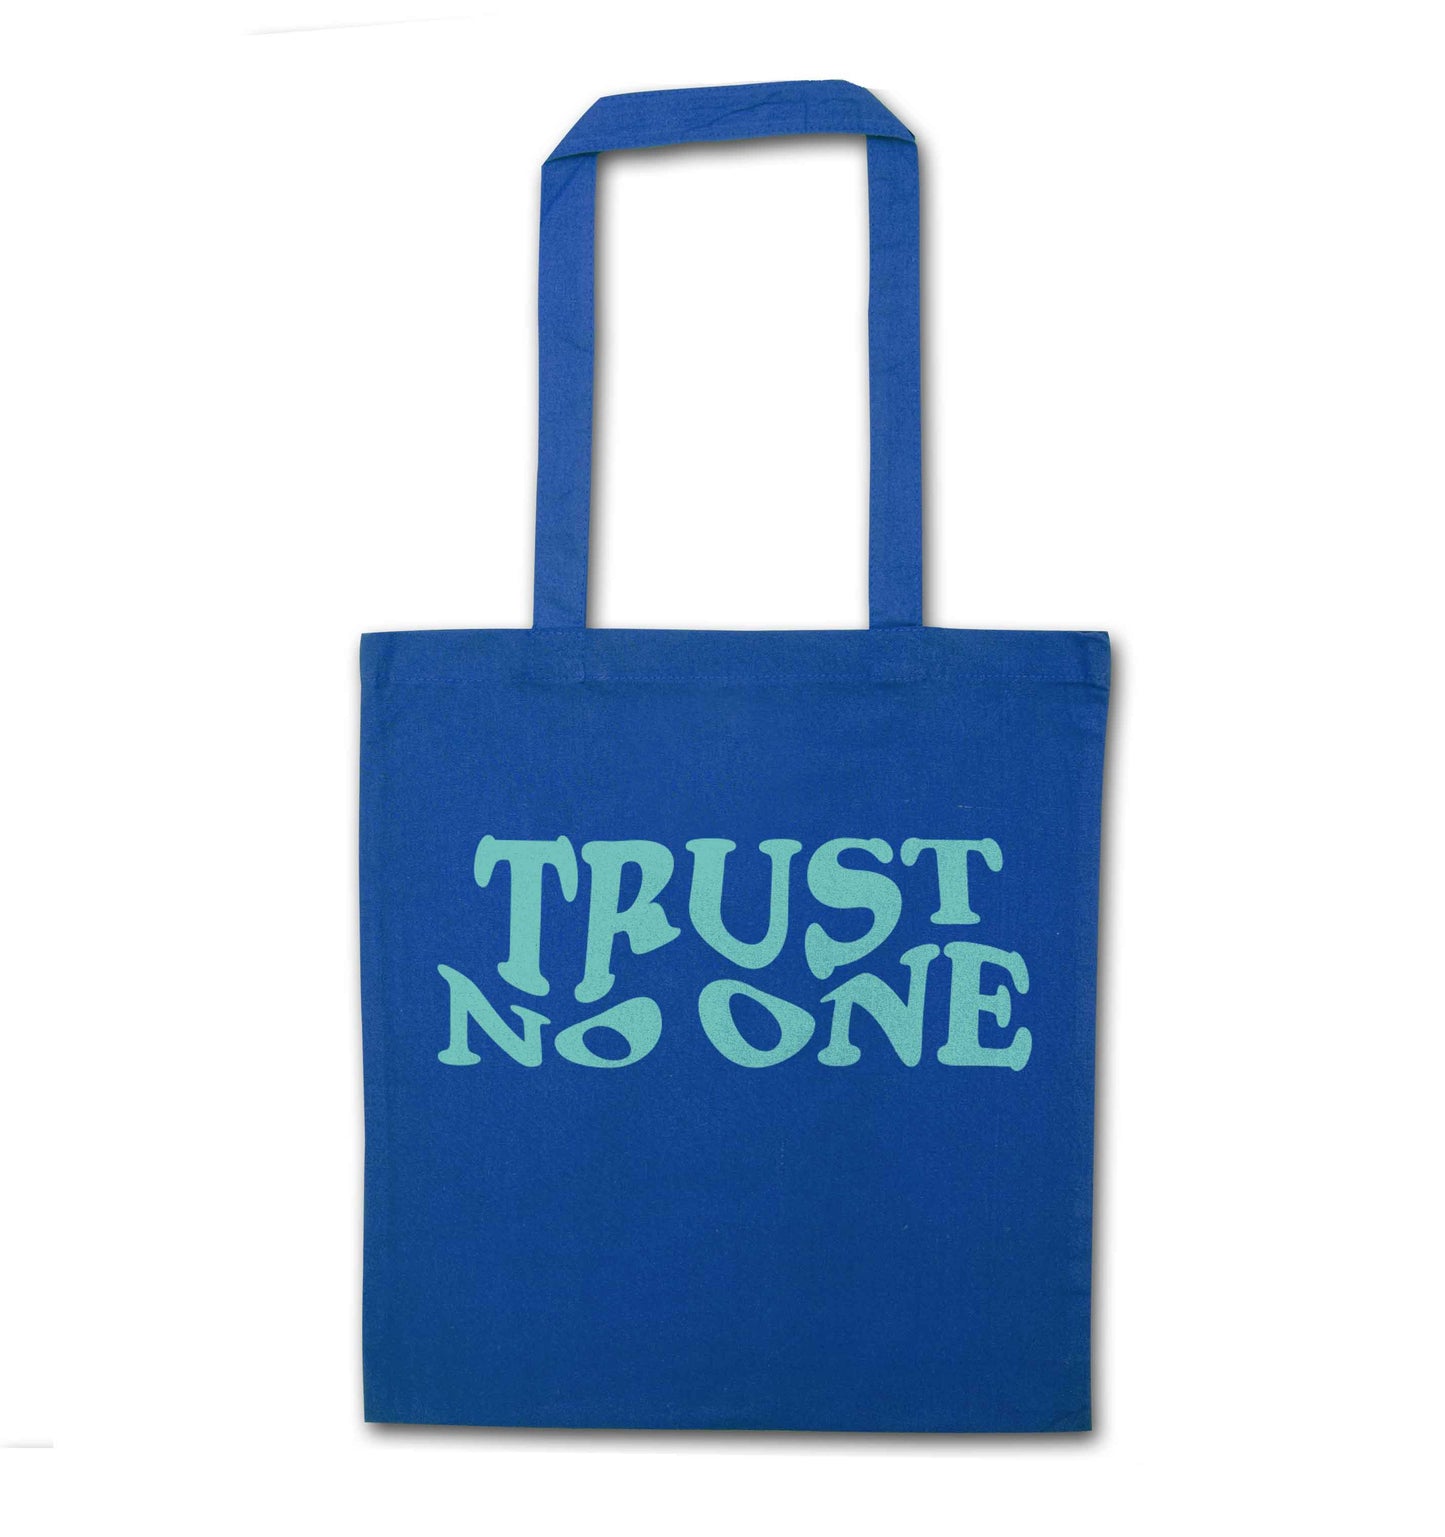 Trust no one blue tote bag